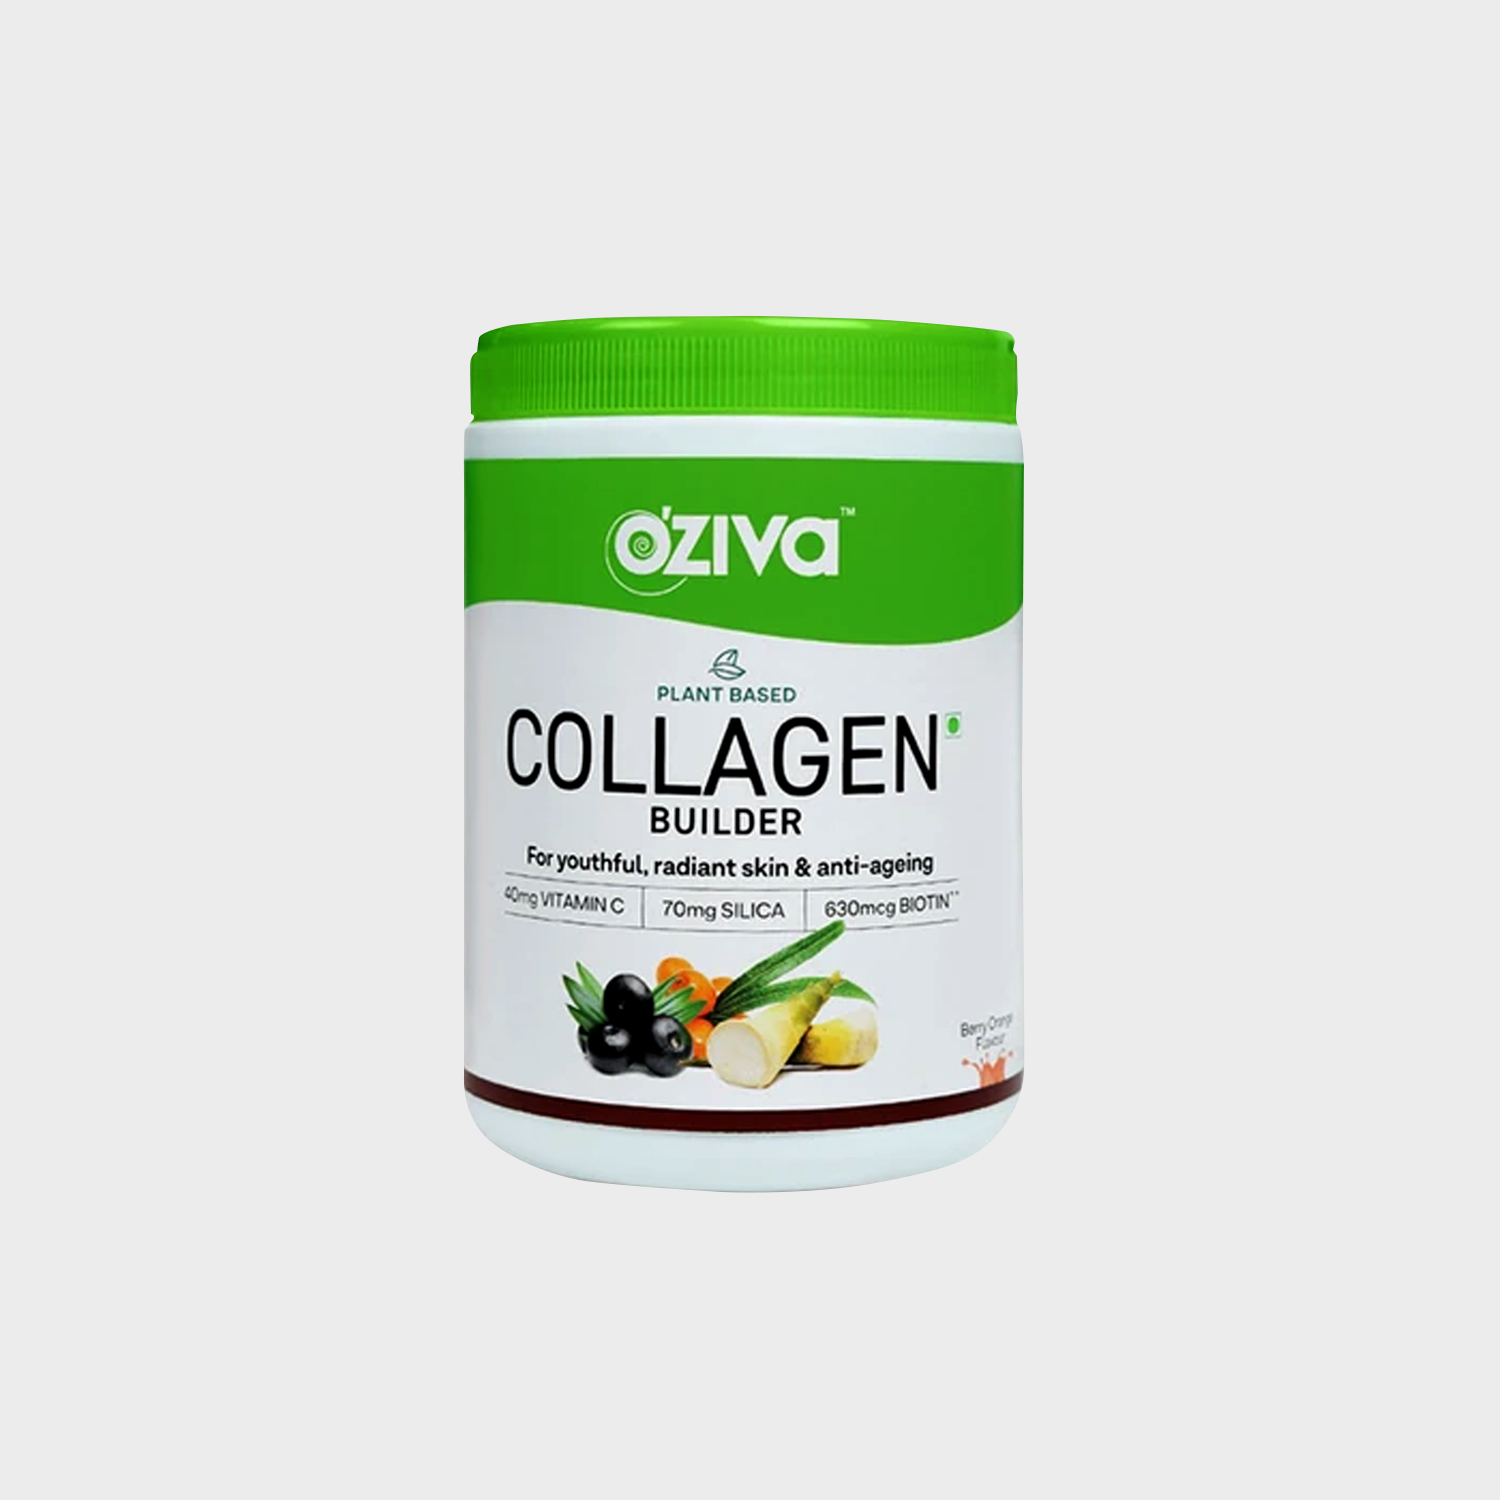 OZiva Plant based Collagen Builder 250g Rs.809 | Best collagen powder - Cureka